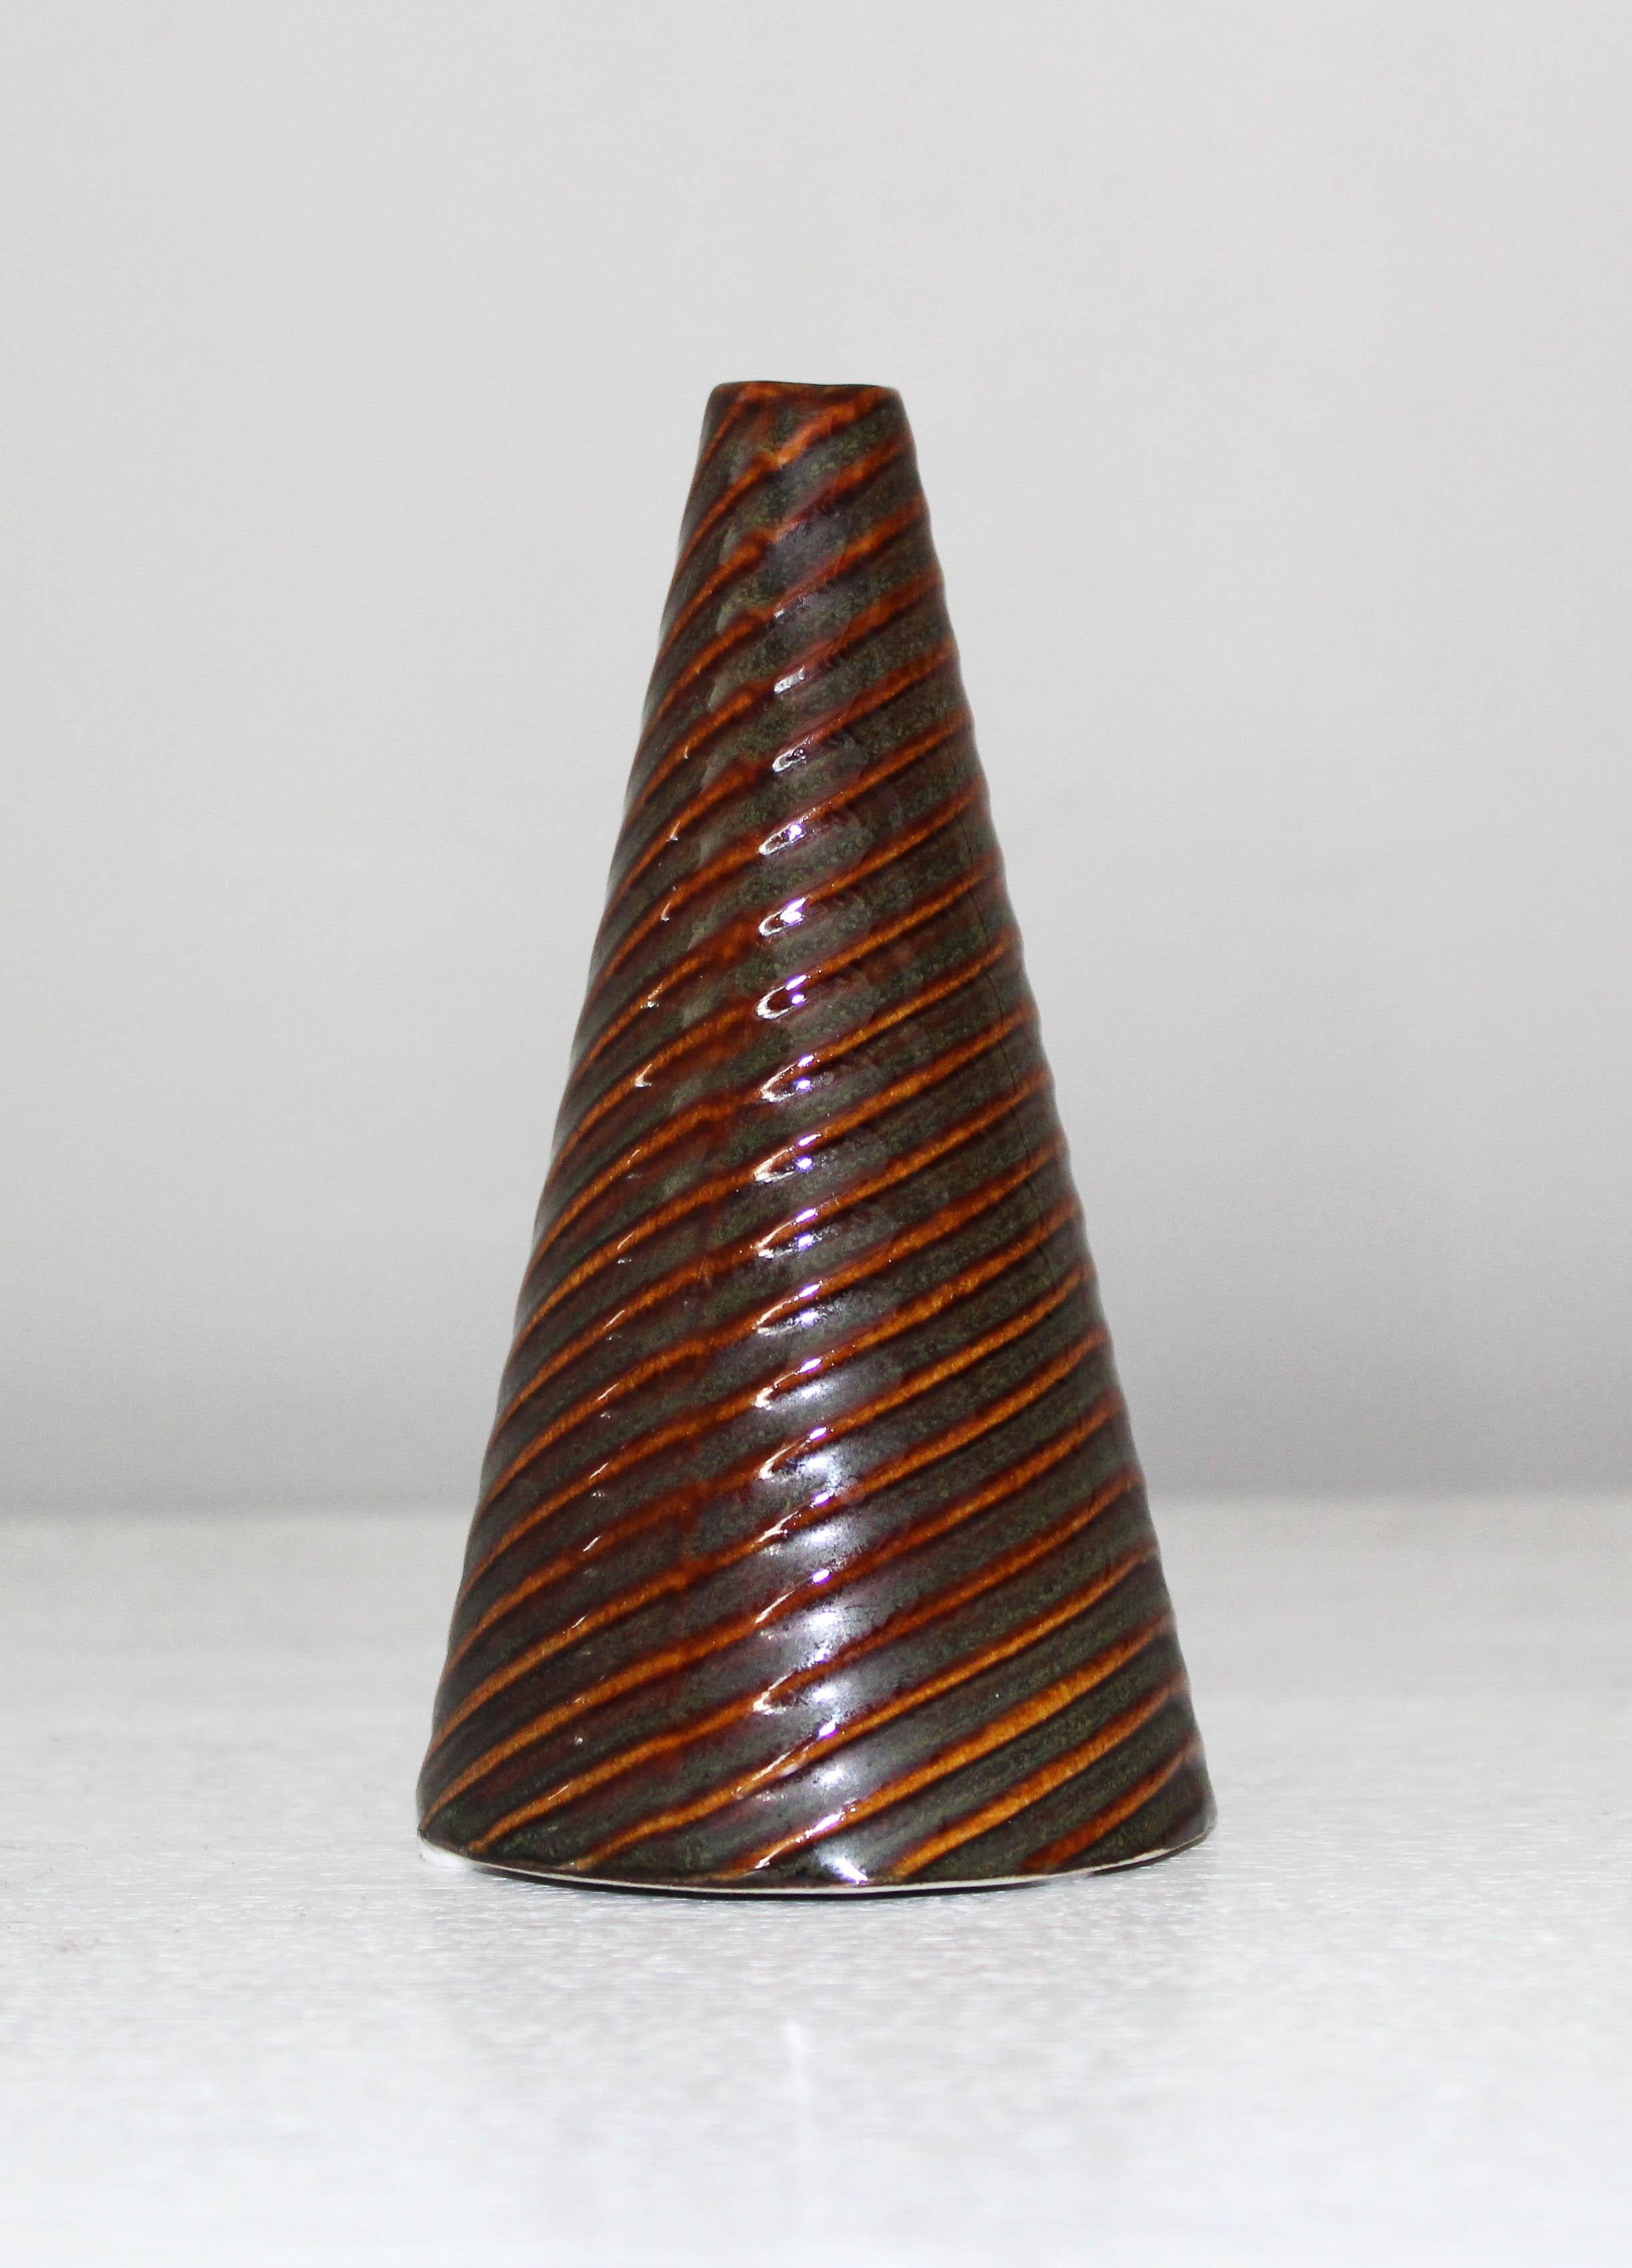 Midcentury ceramic vase designed by Stig Lindberg for Gustavsberg. The model is called Domino.
Excellent vintage condition.